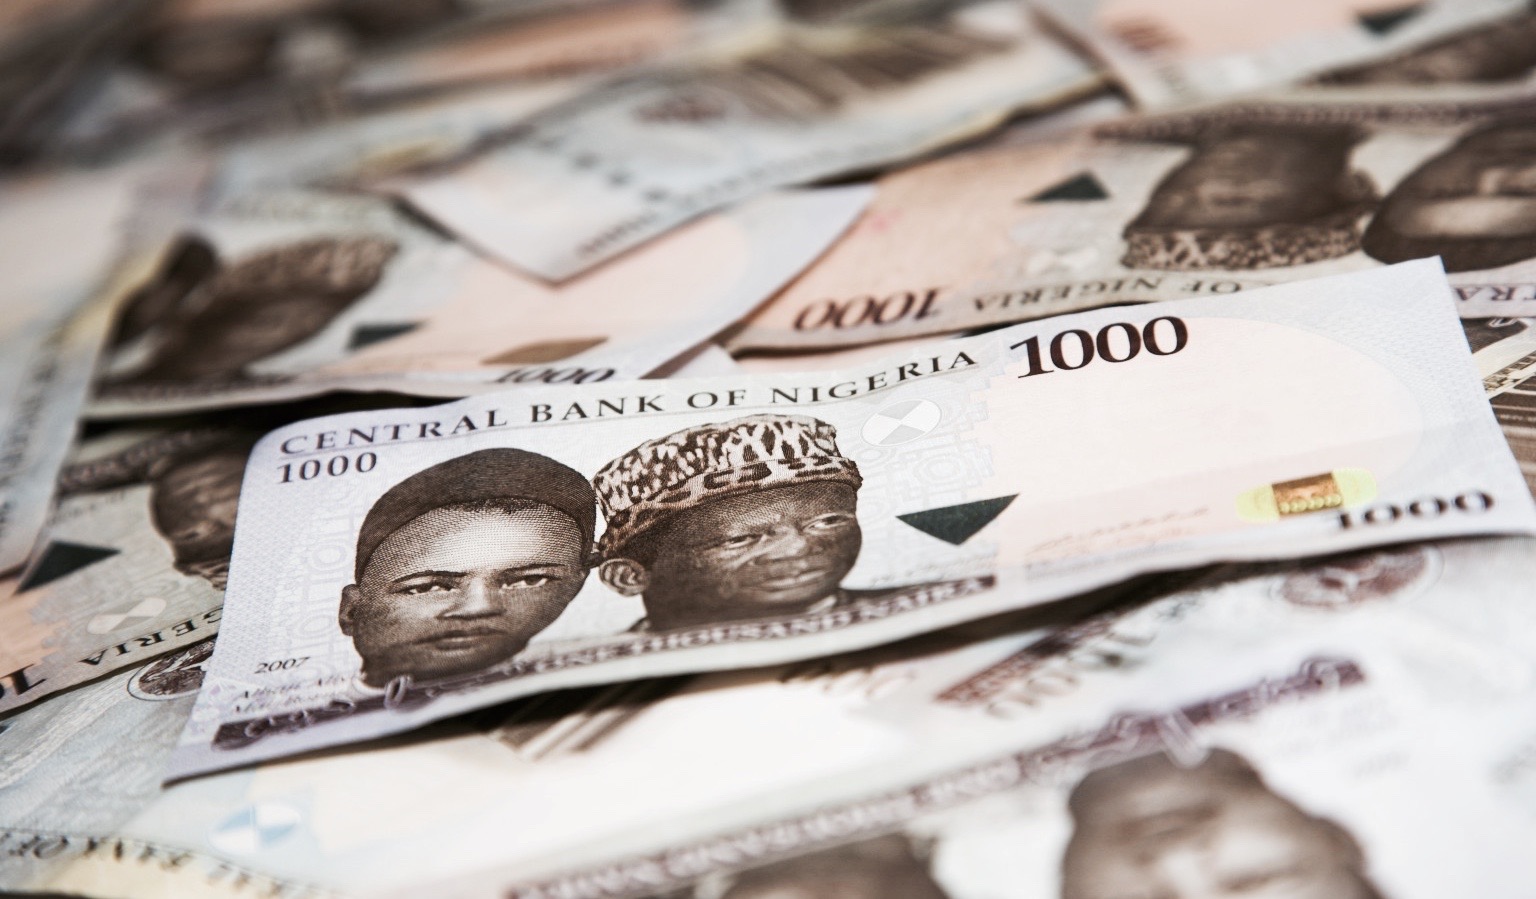 1000 naira bills, Nigerian currency.